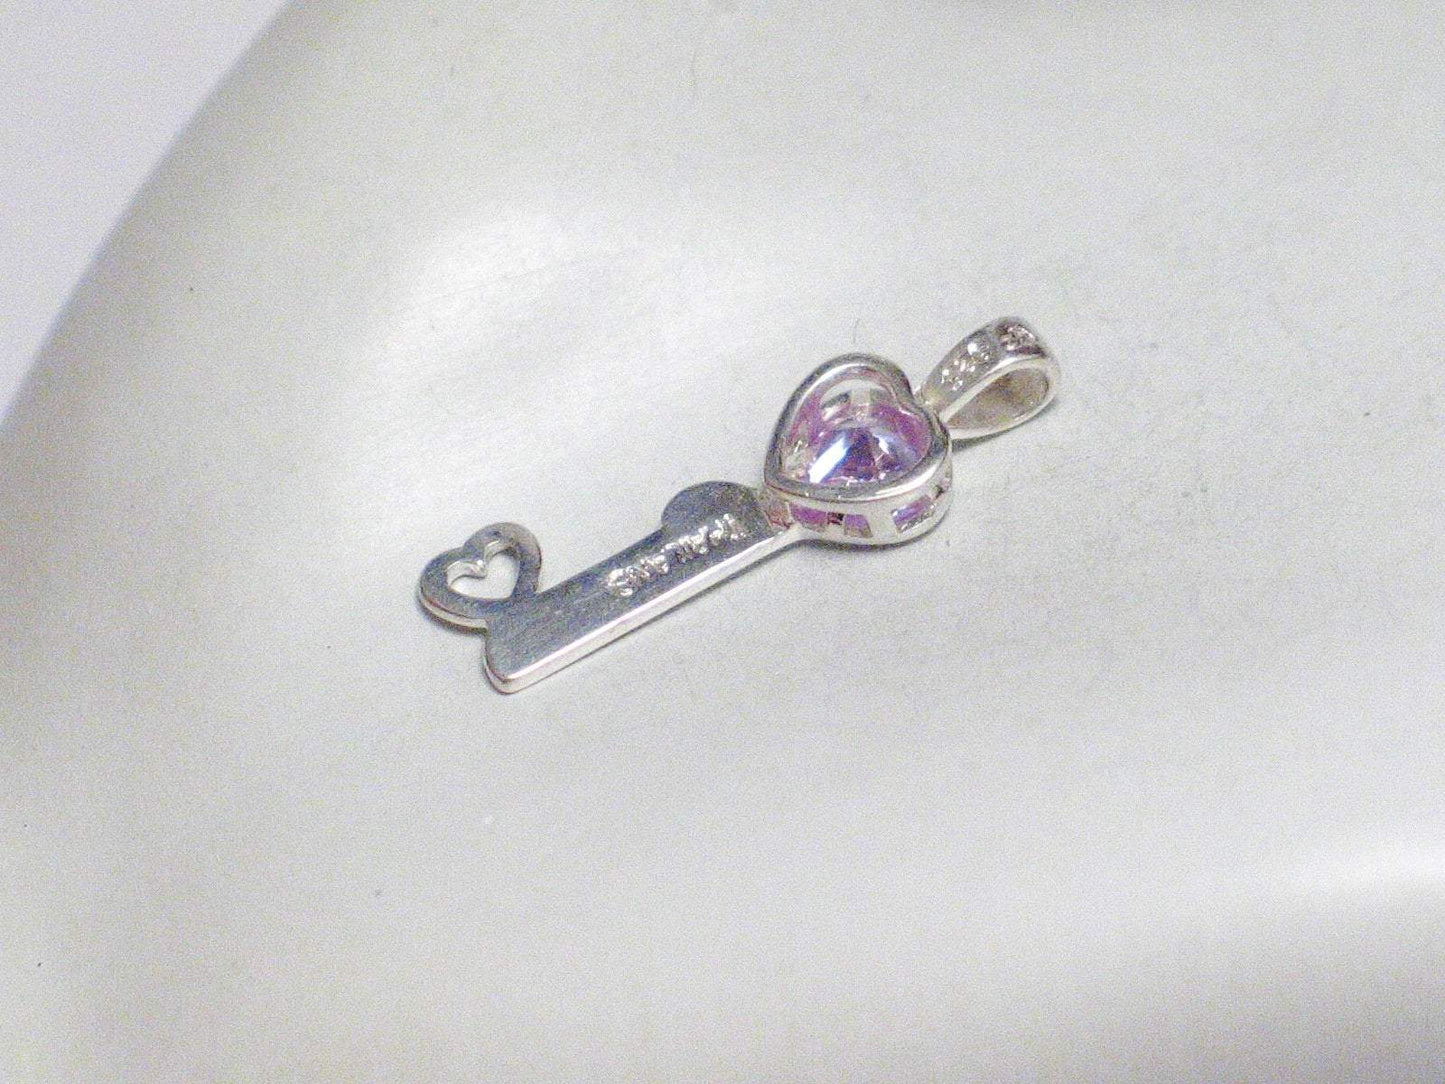 Sterling Silver Pendant lavender pink heart key charm skeleton design birthstone or Love theme - Blingschlingers Jewelry